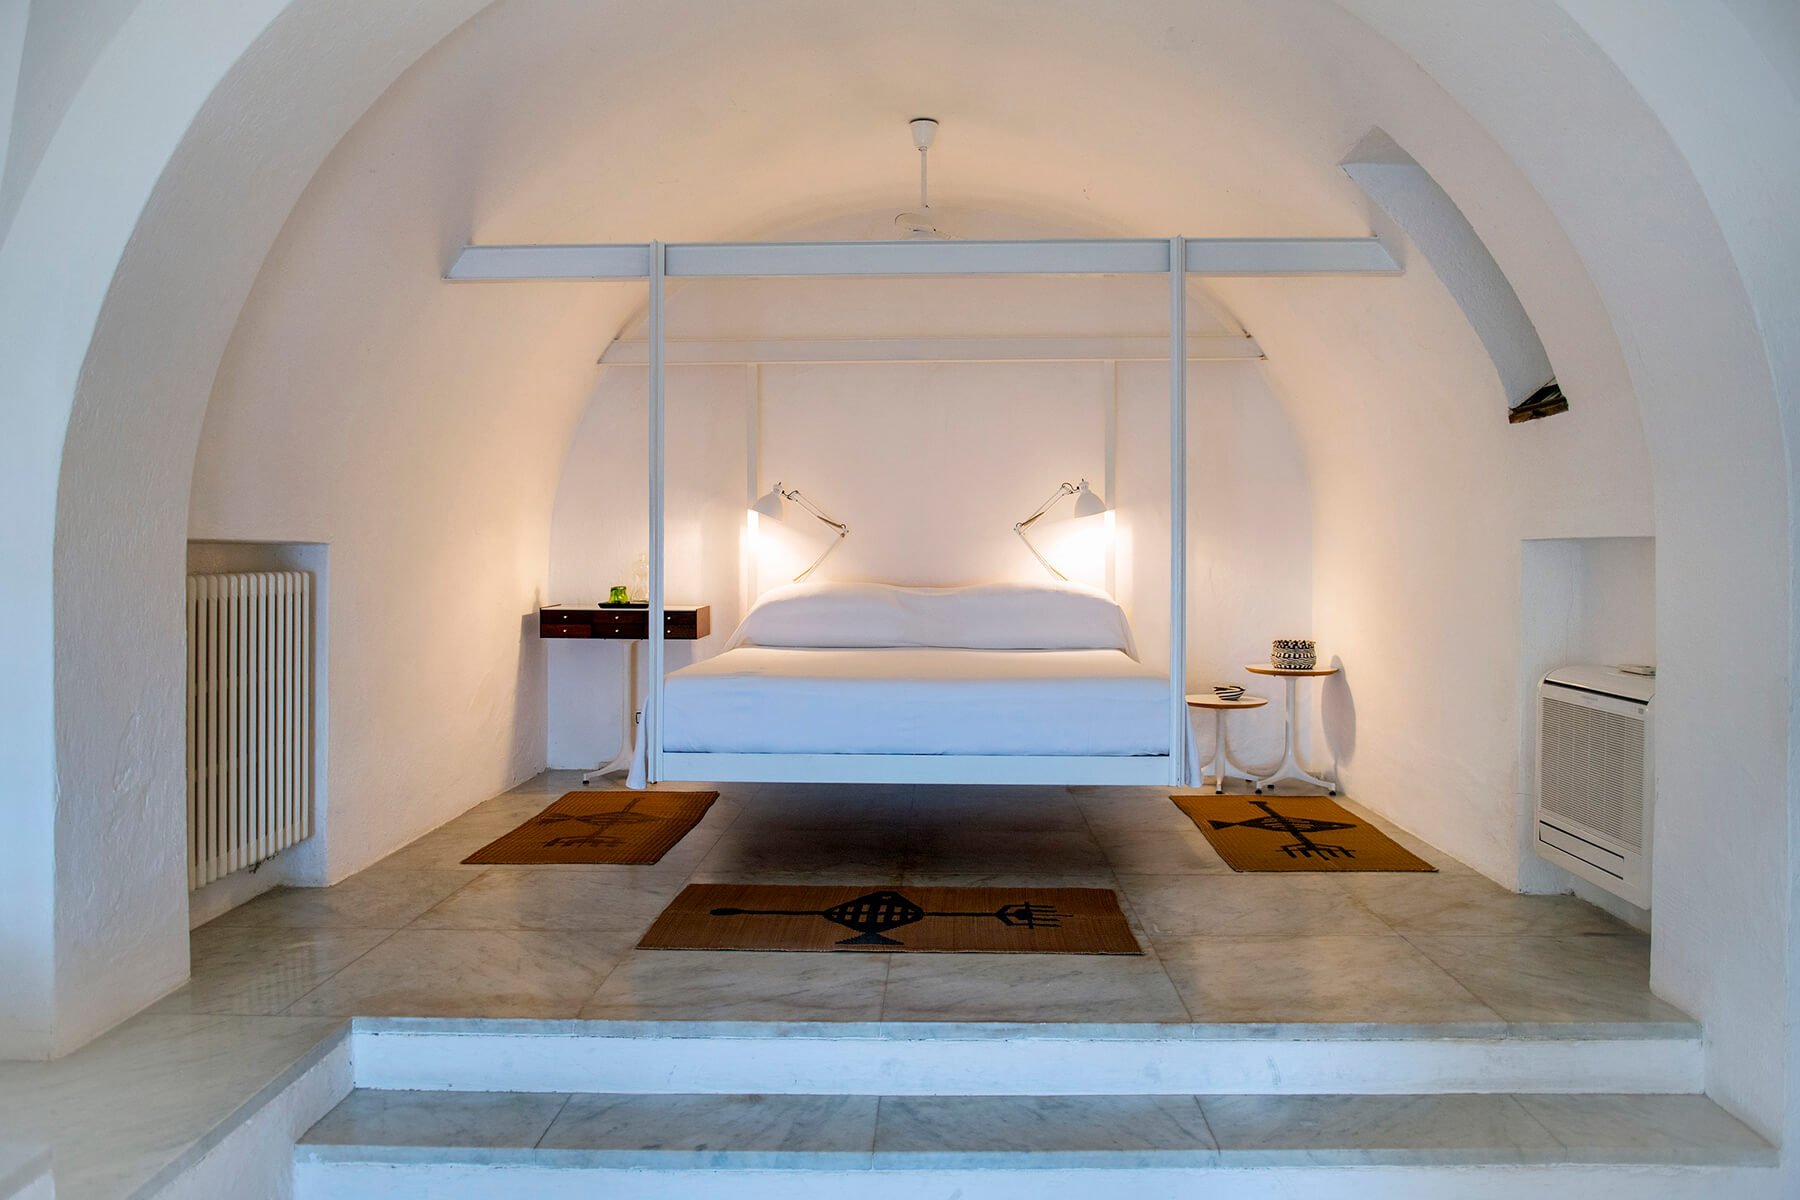 Francis York Fully Catered Luxury Villa Rental on the Amalfi Coast 6.jpg